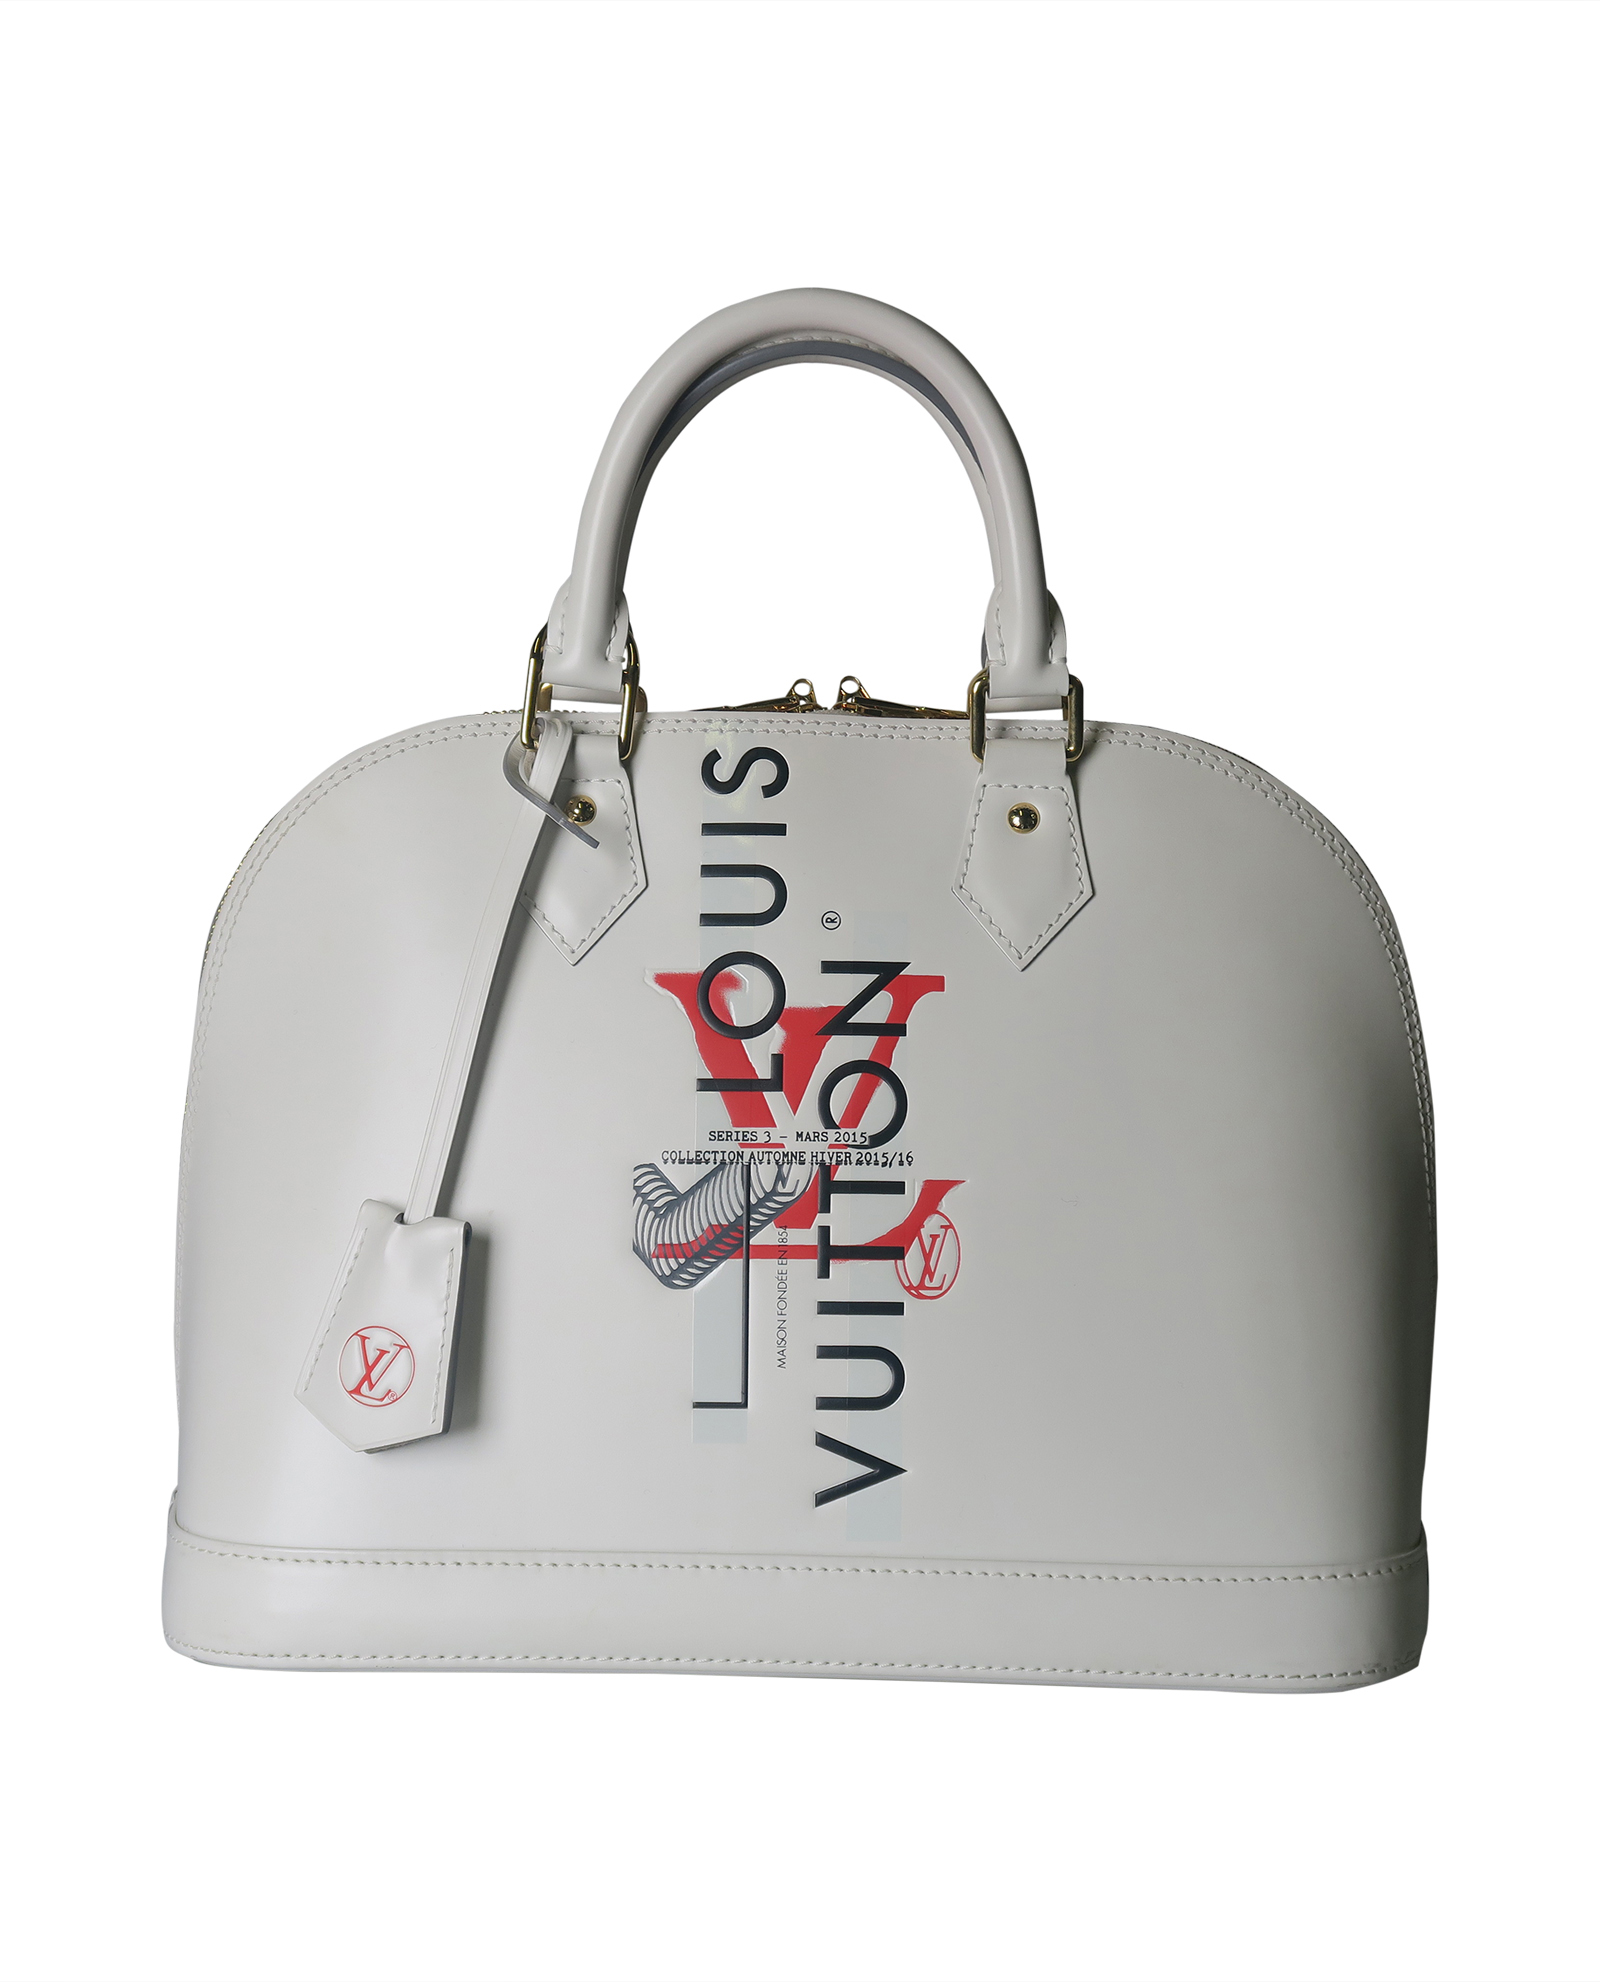 Louis Vuitton White Leather Limited Edition Mars 2015 Alma PM Bag Louis  Vuitton